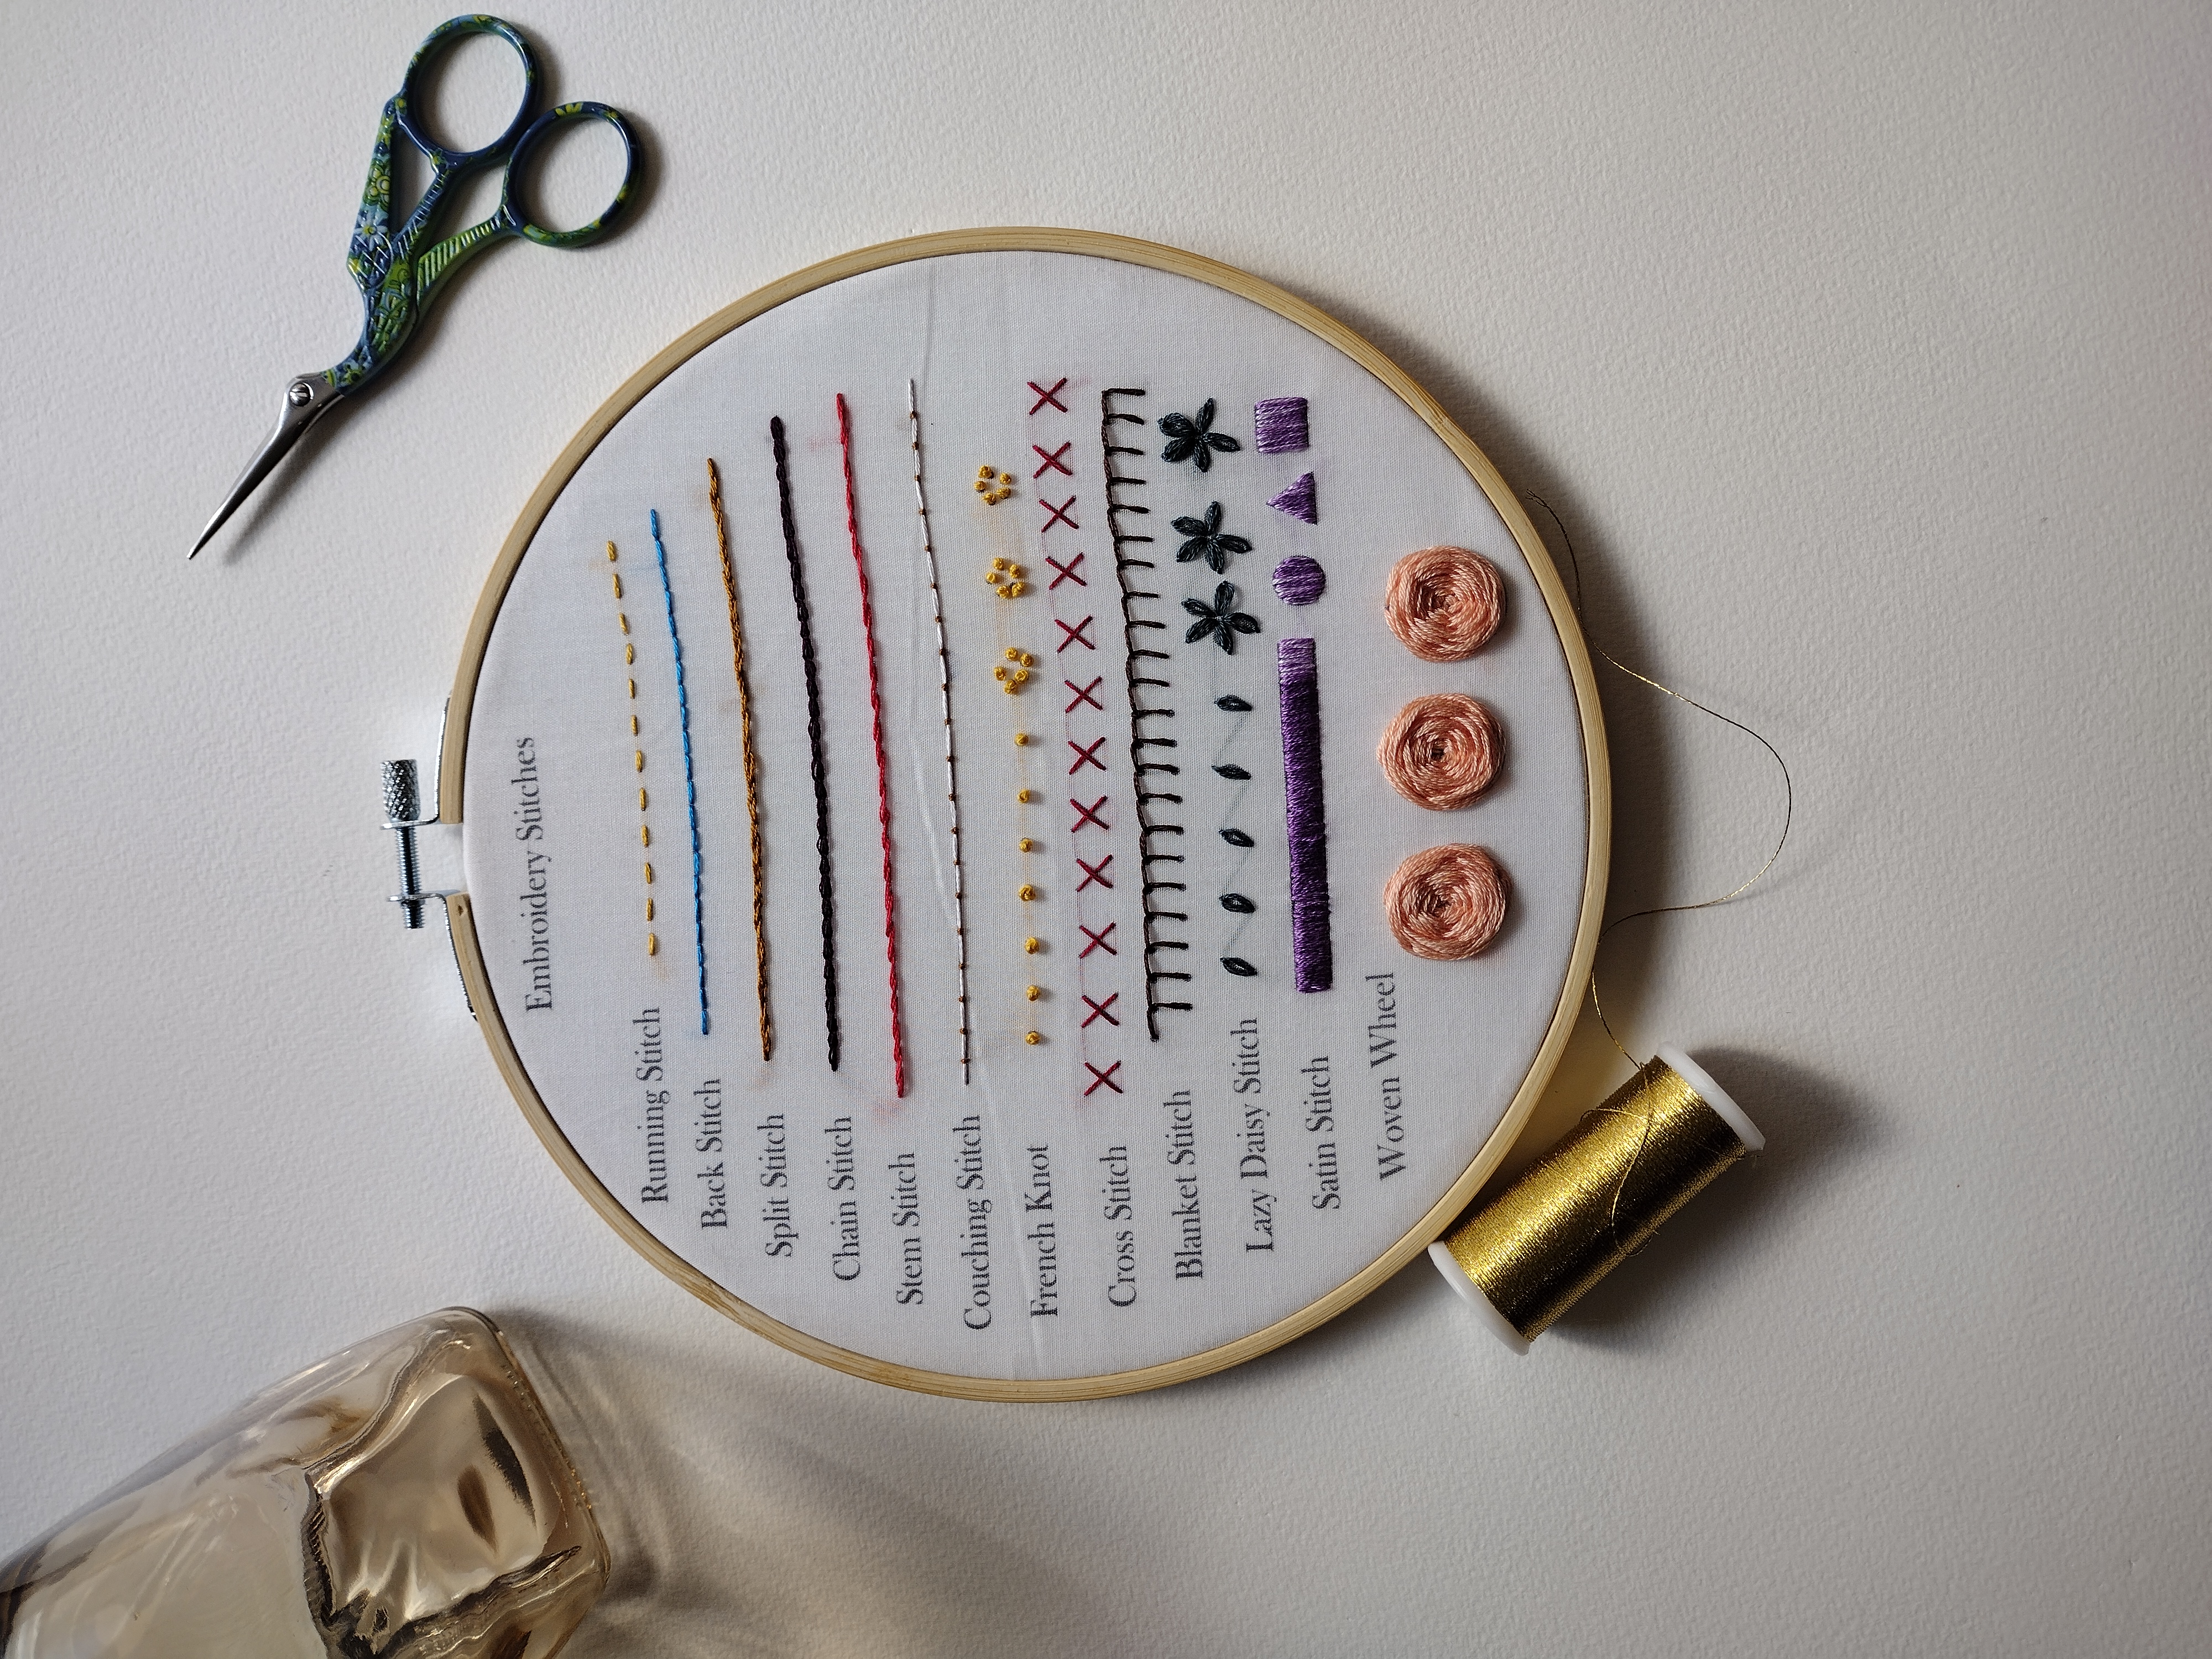 Embroidery Basics